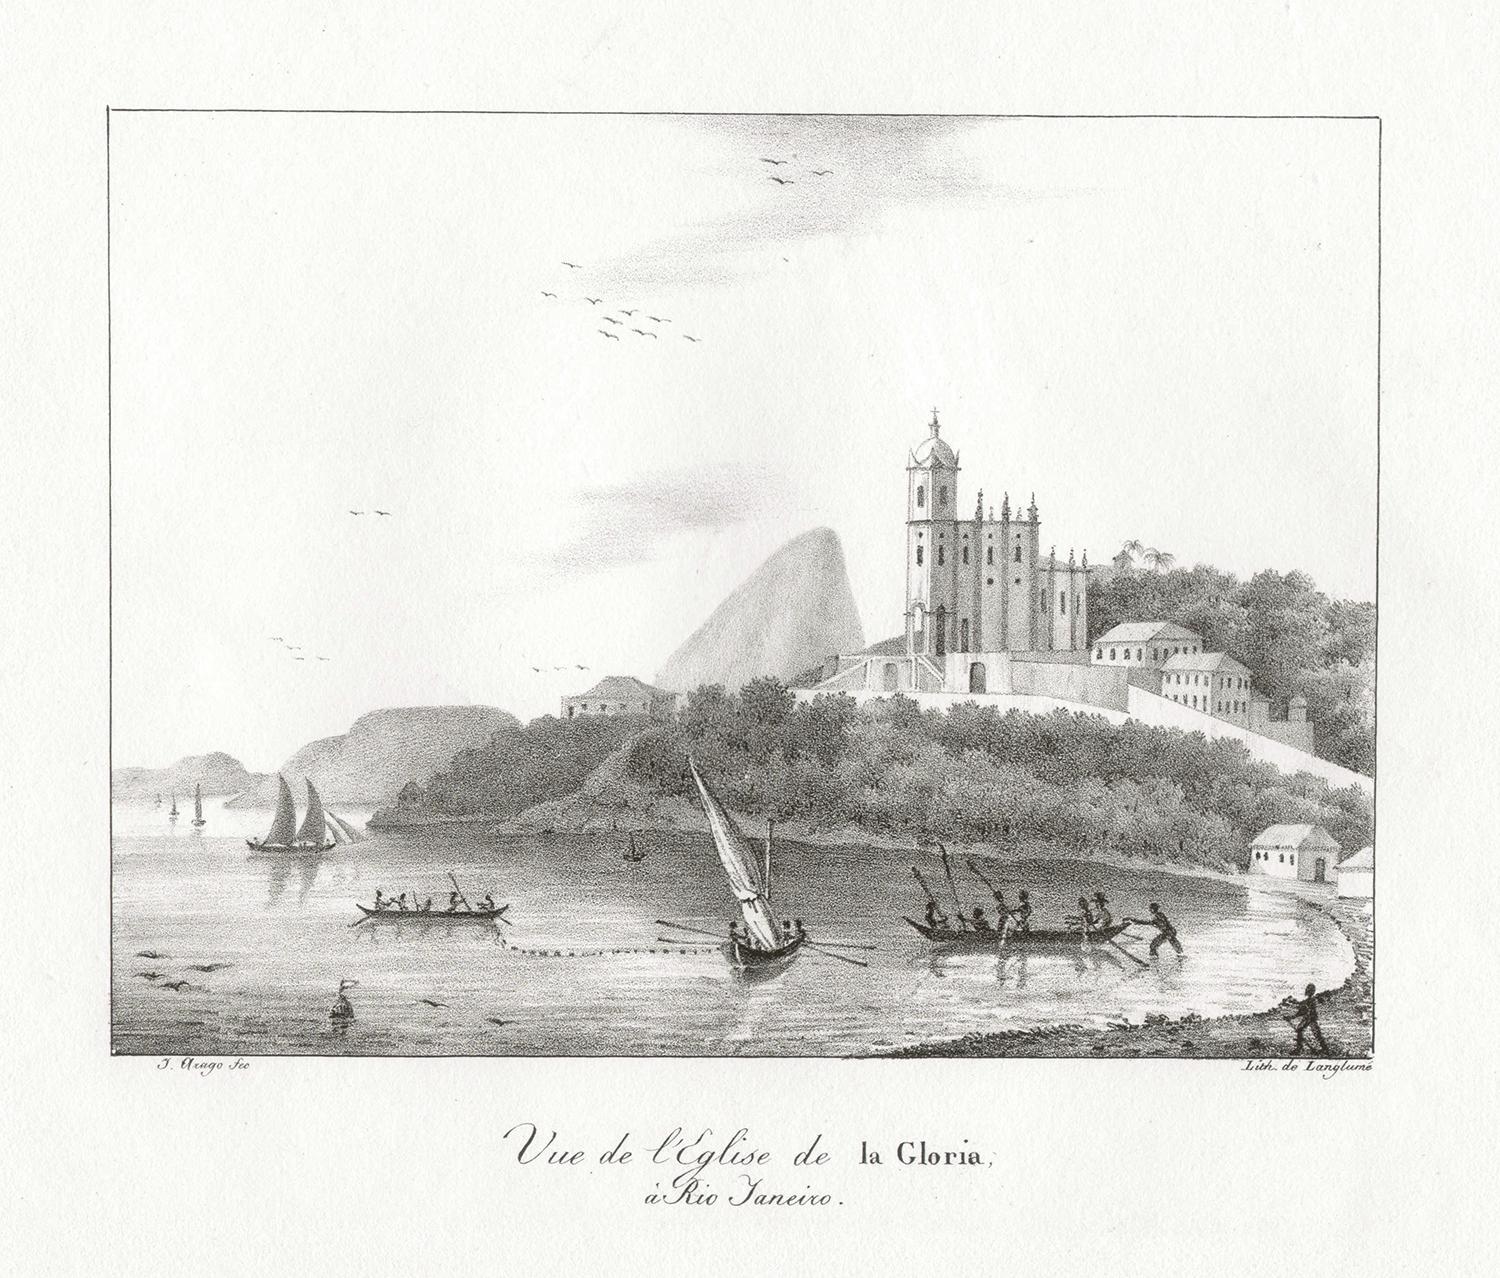 'Vue de l'Eglise de la Gloria a Rio Janeiro', Brazil, Freycinet lithograph